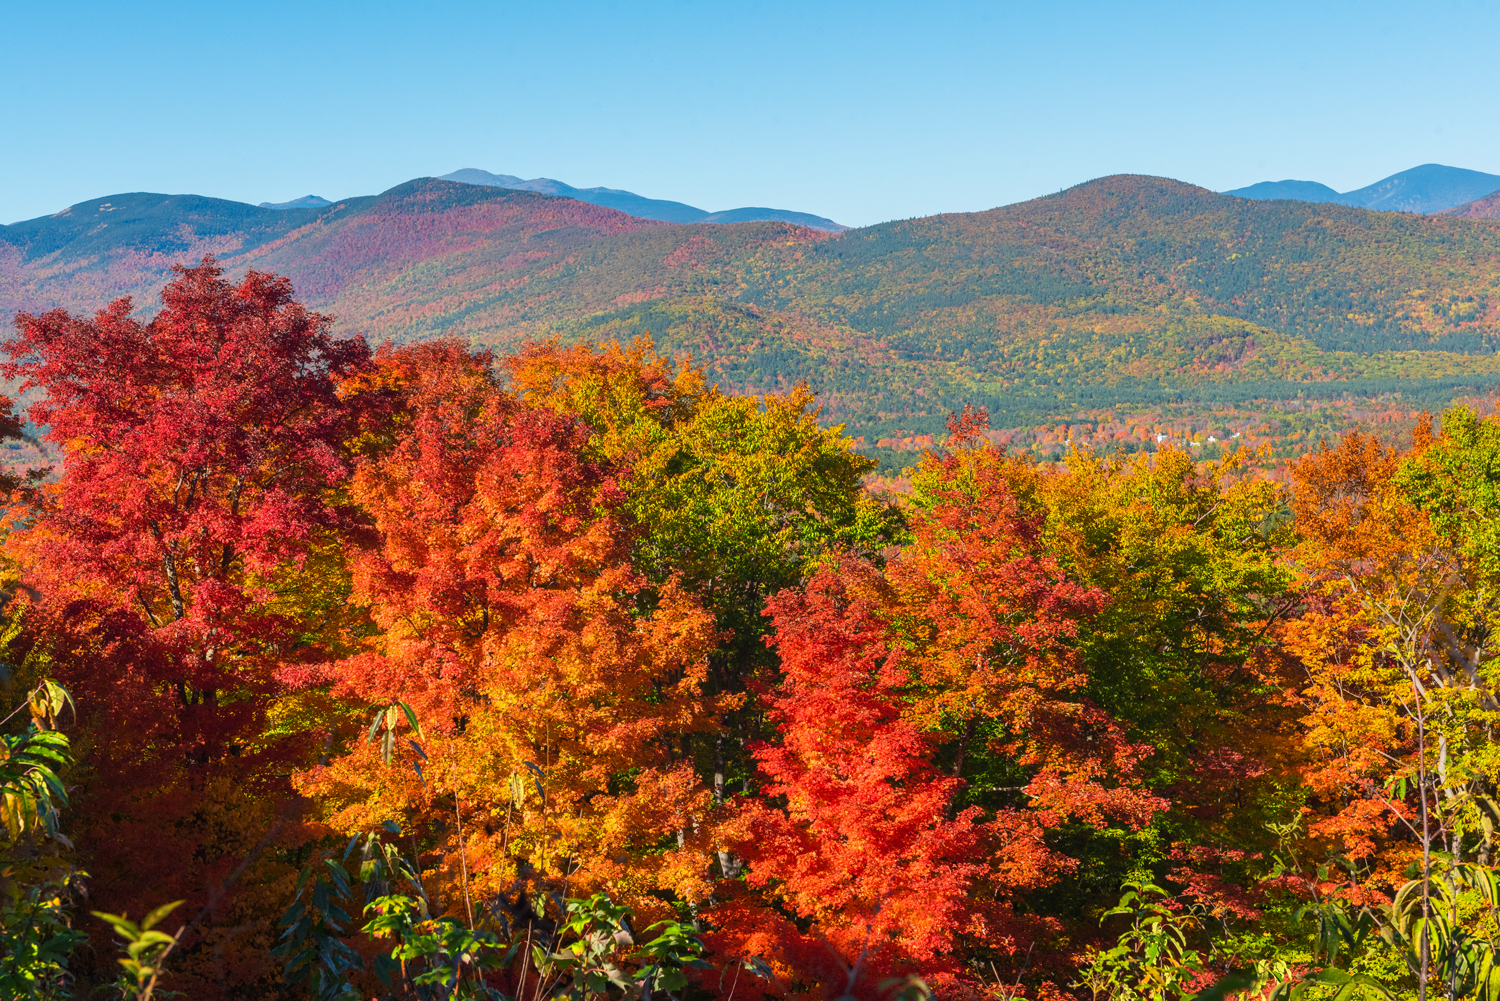 Appalachian mountains in the fall